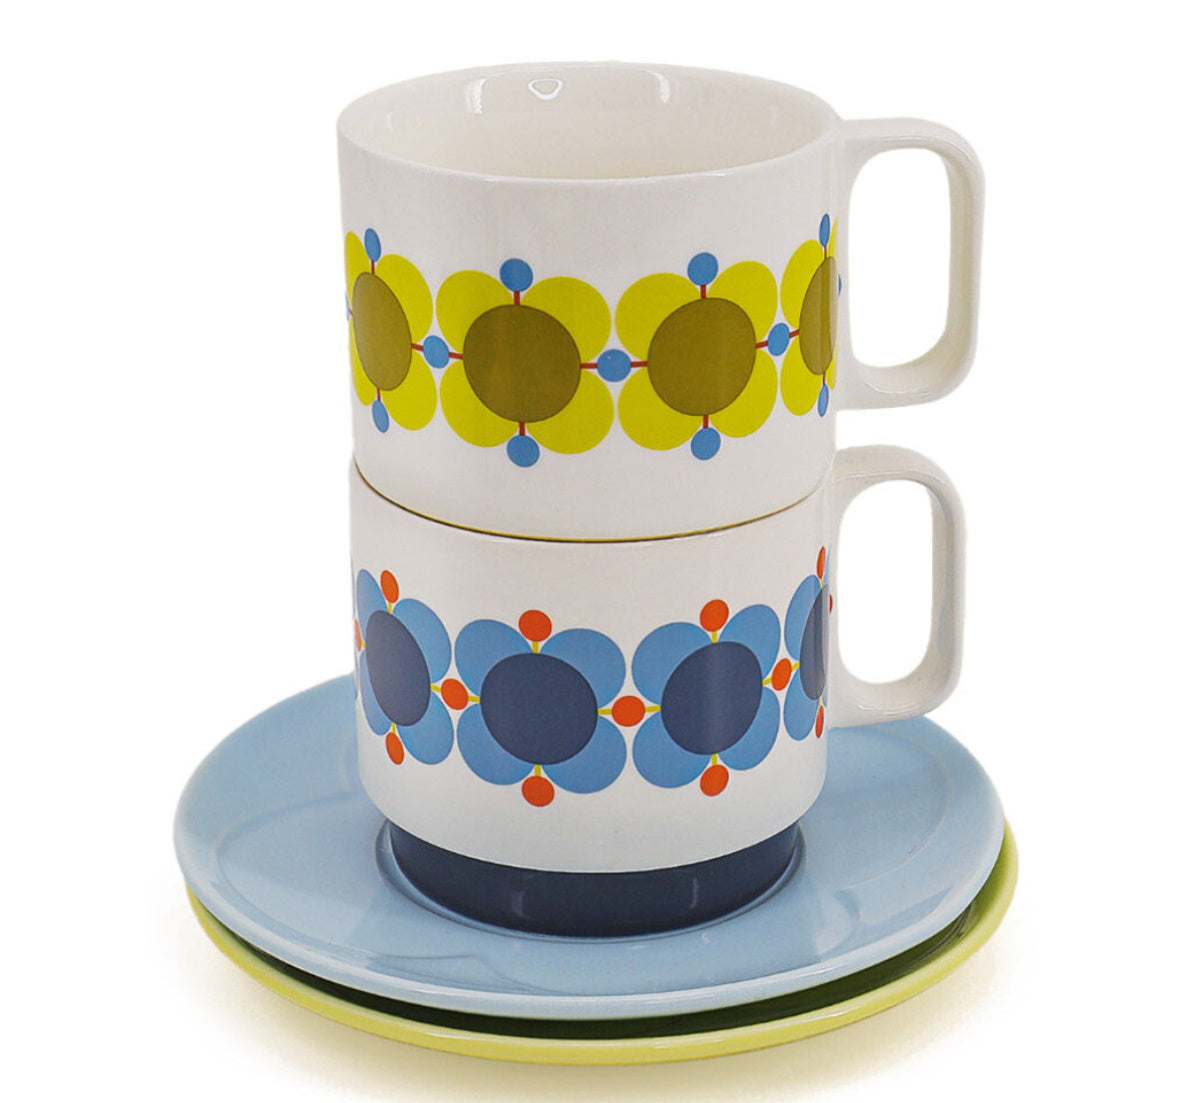 Orla Kiely Ceramic Tea Cup & Saucer Set - Atomic Flower